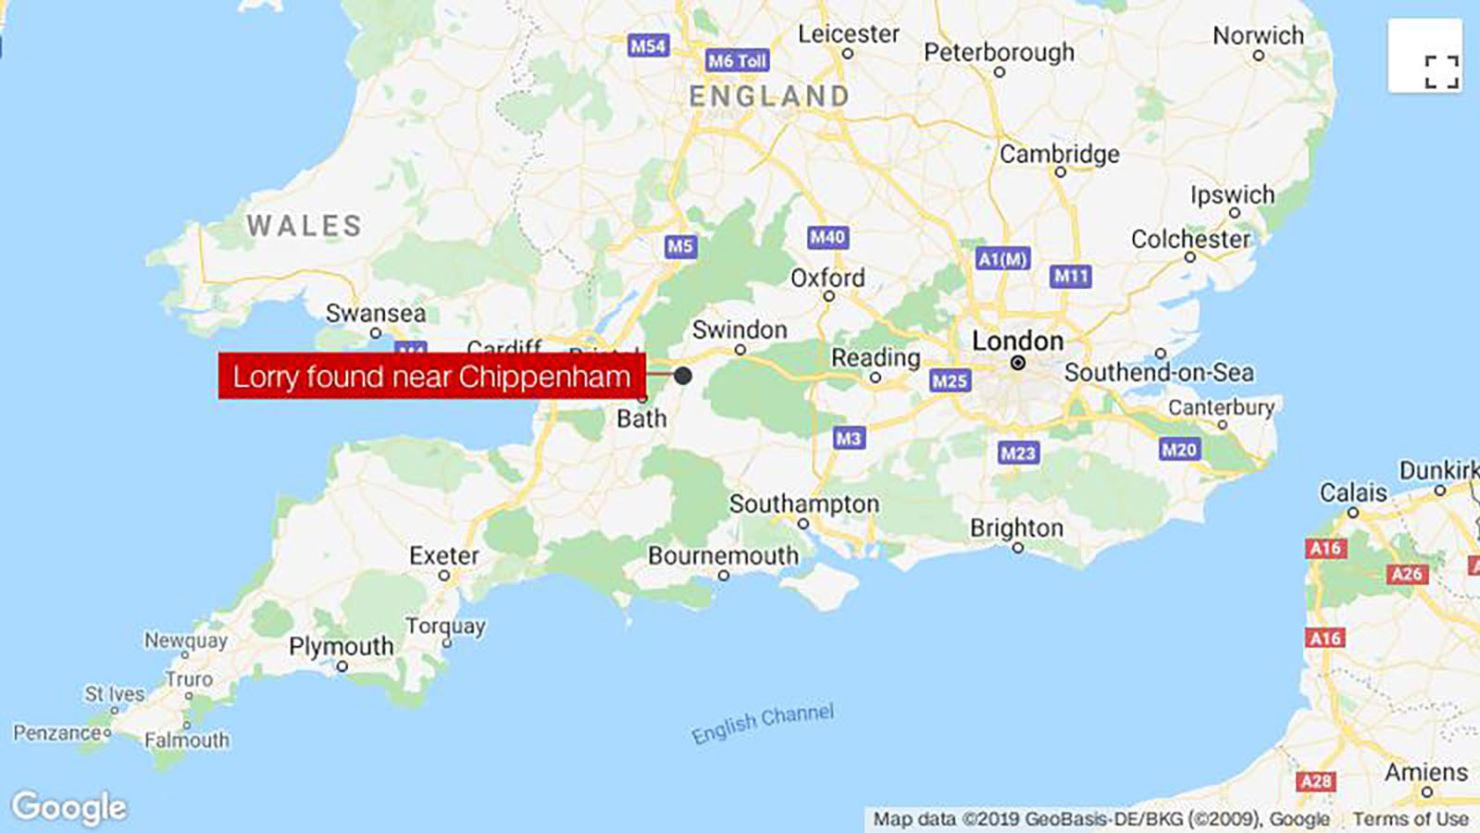 The 15 men were found in a lorry near Chippenham, southwest England.